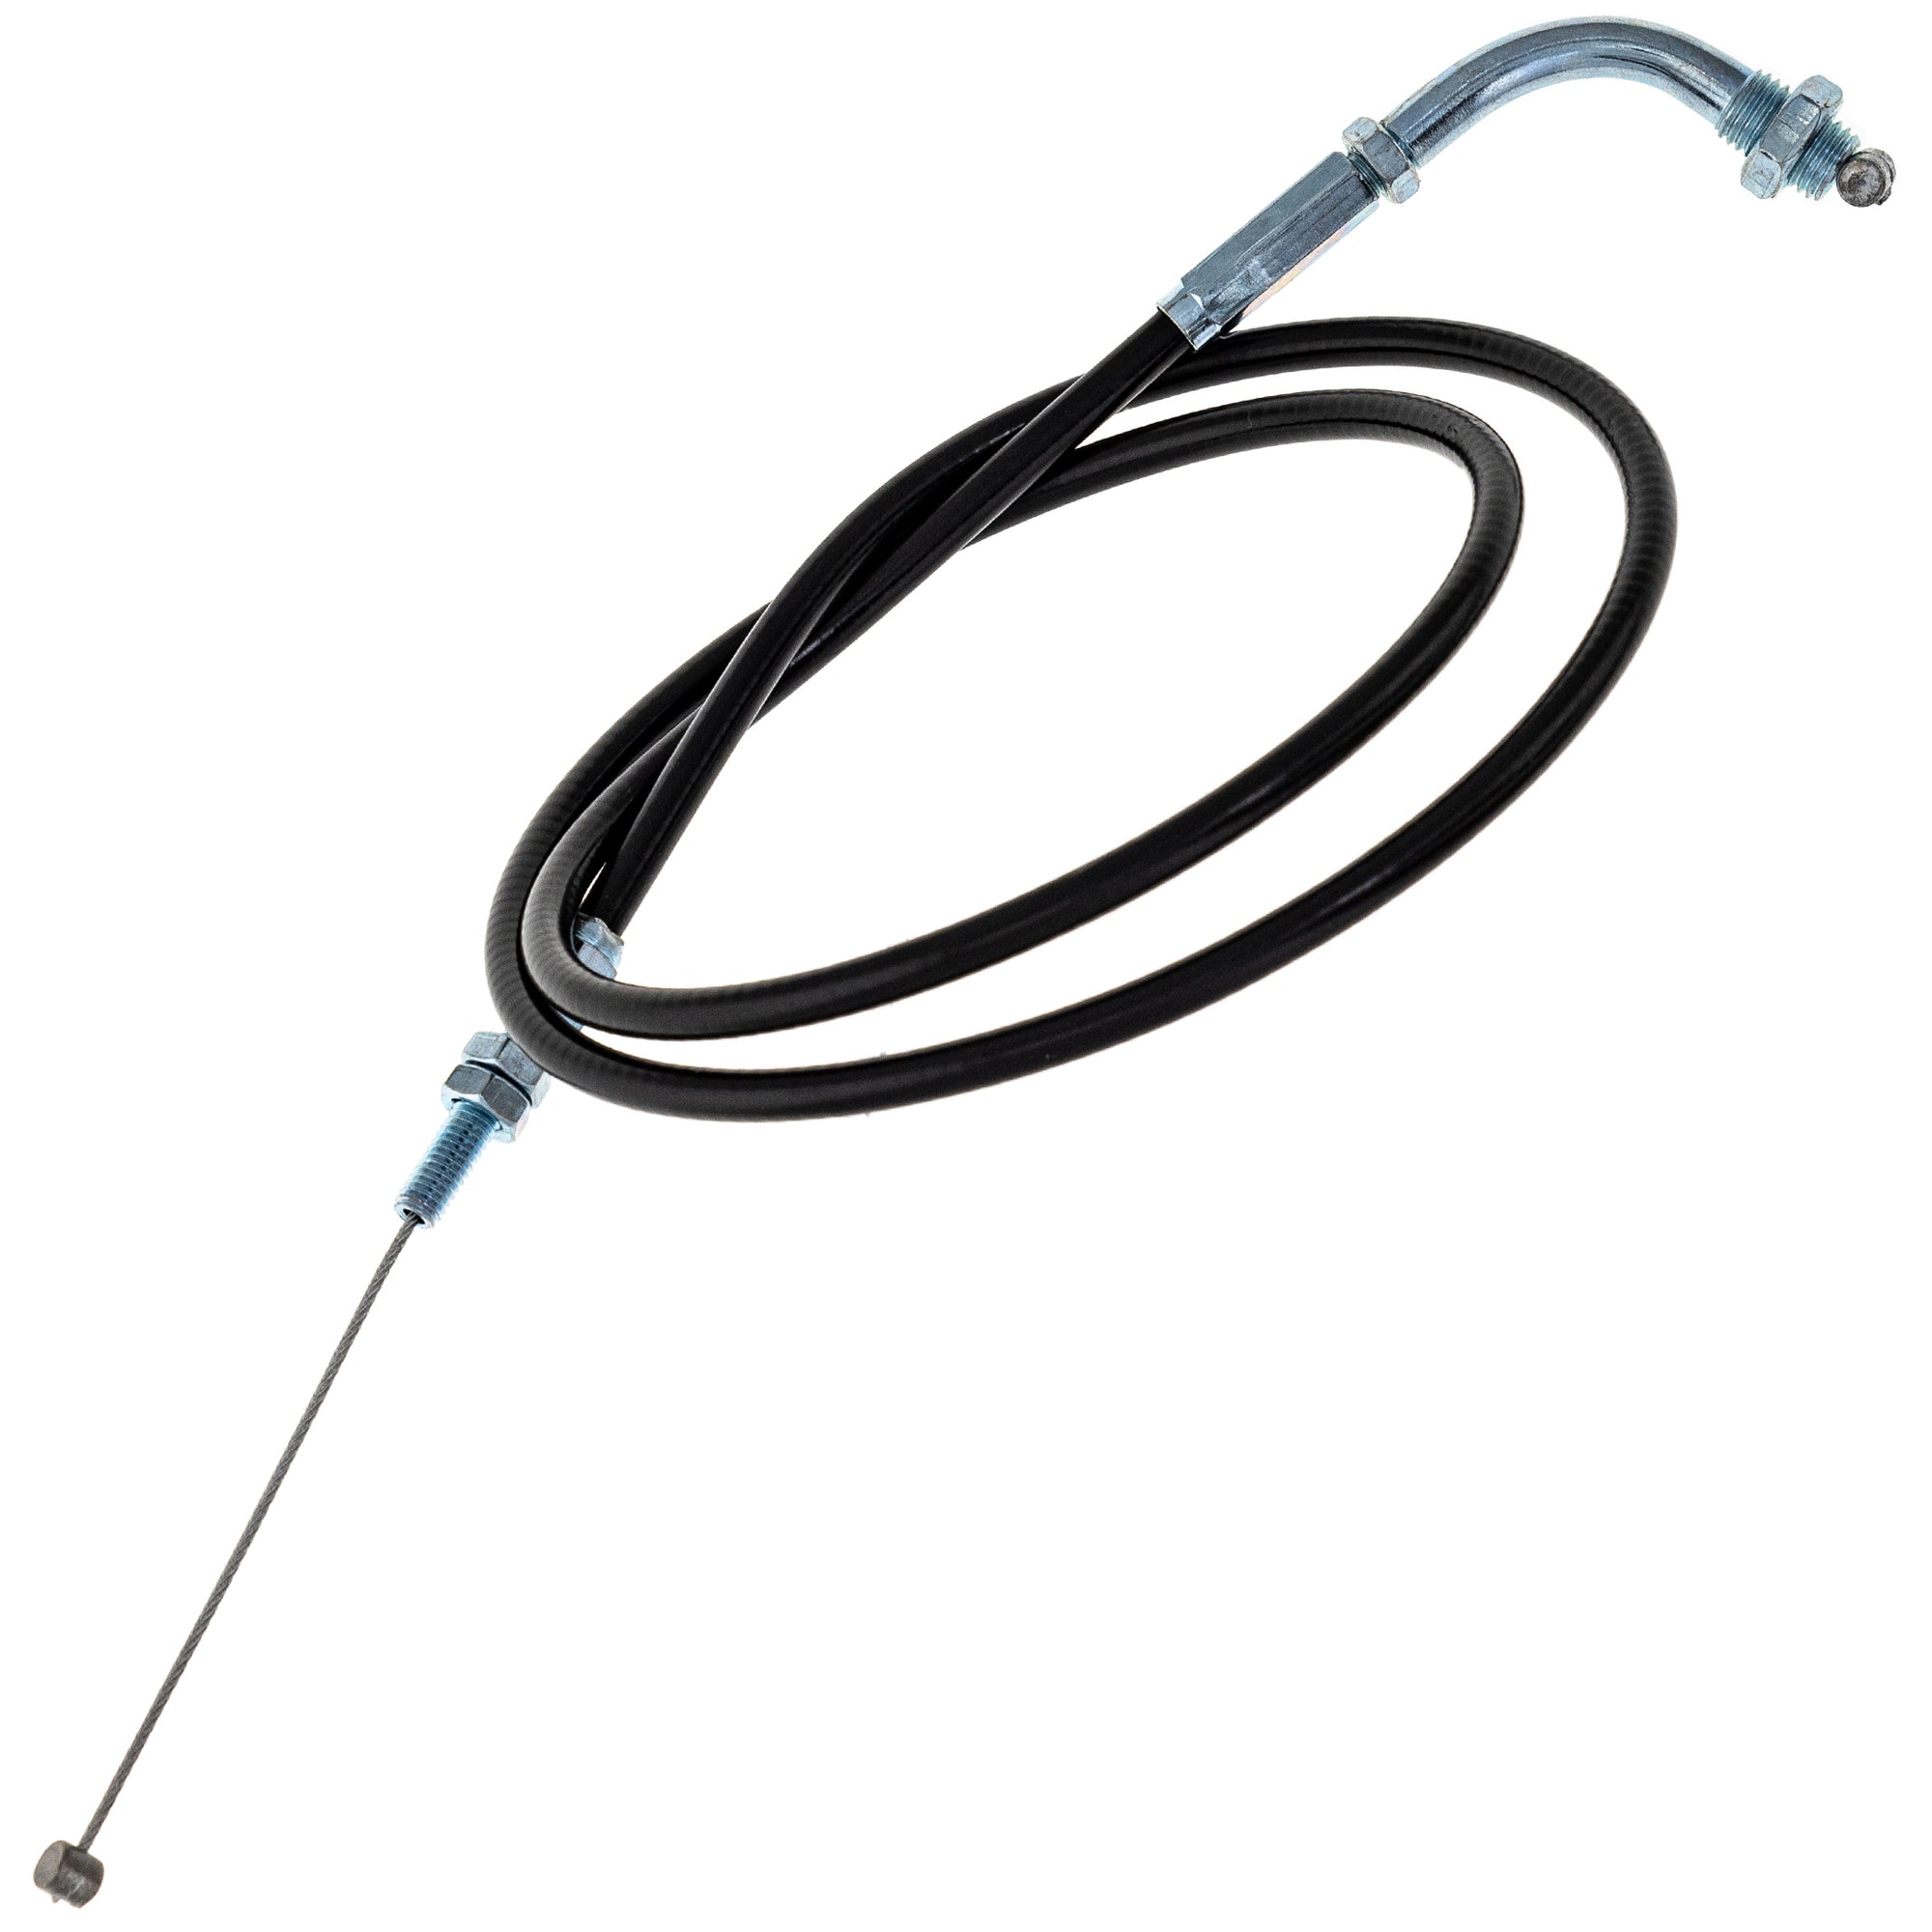 Throttle Cable for Kawasaki KZ1000 KZ1000 KZ550 KZ650 54012-149